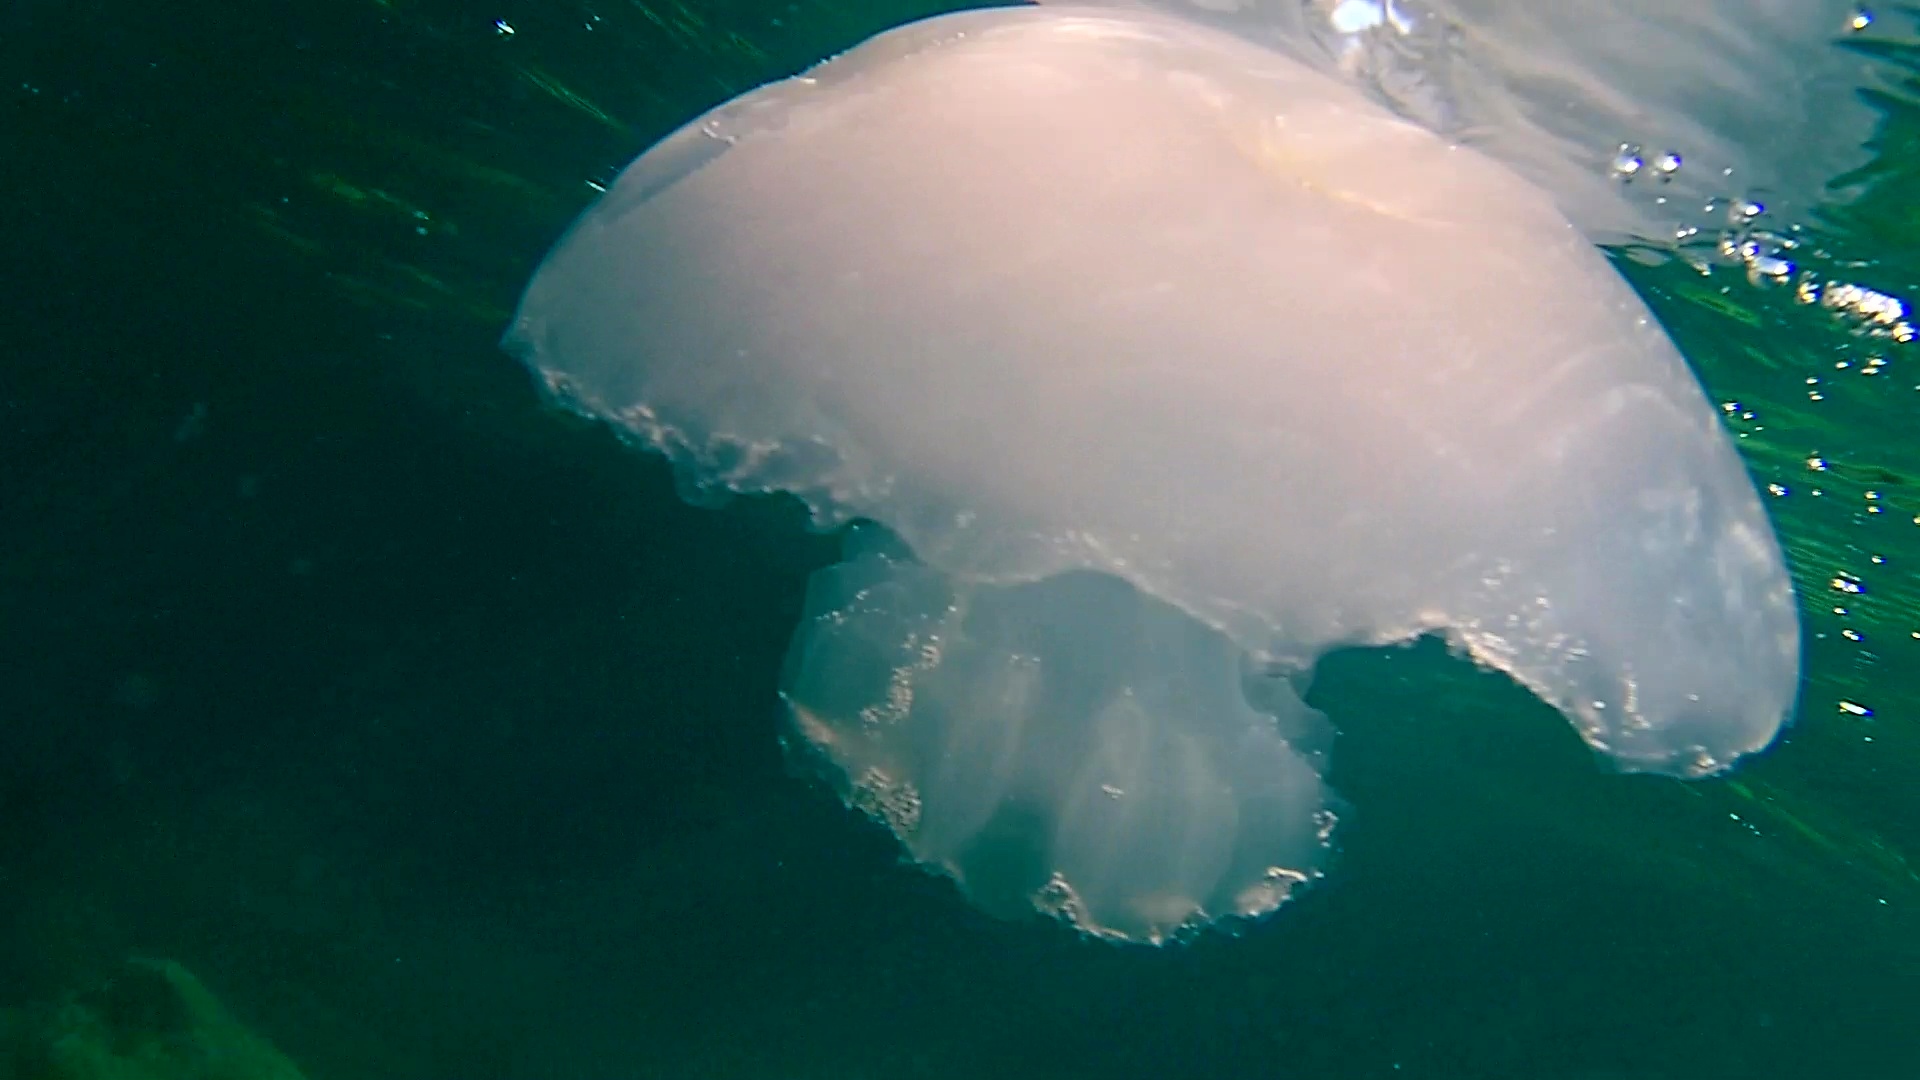 medusa parzialmente mangiata dai pesci – jellyfish partially eaten by fish – intotheblue.it – vlcsnap-2019-03-10-12h26m14s974